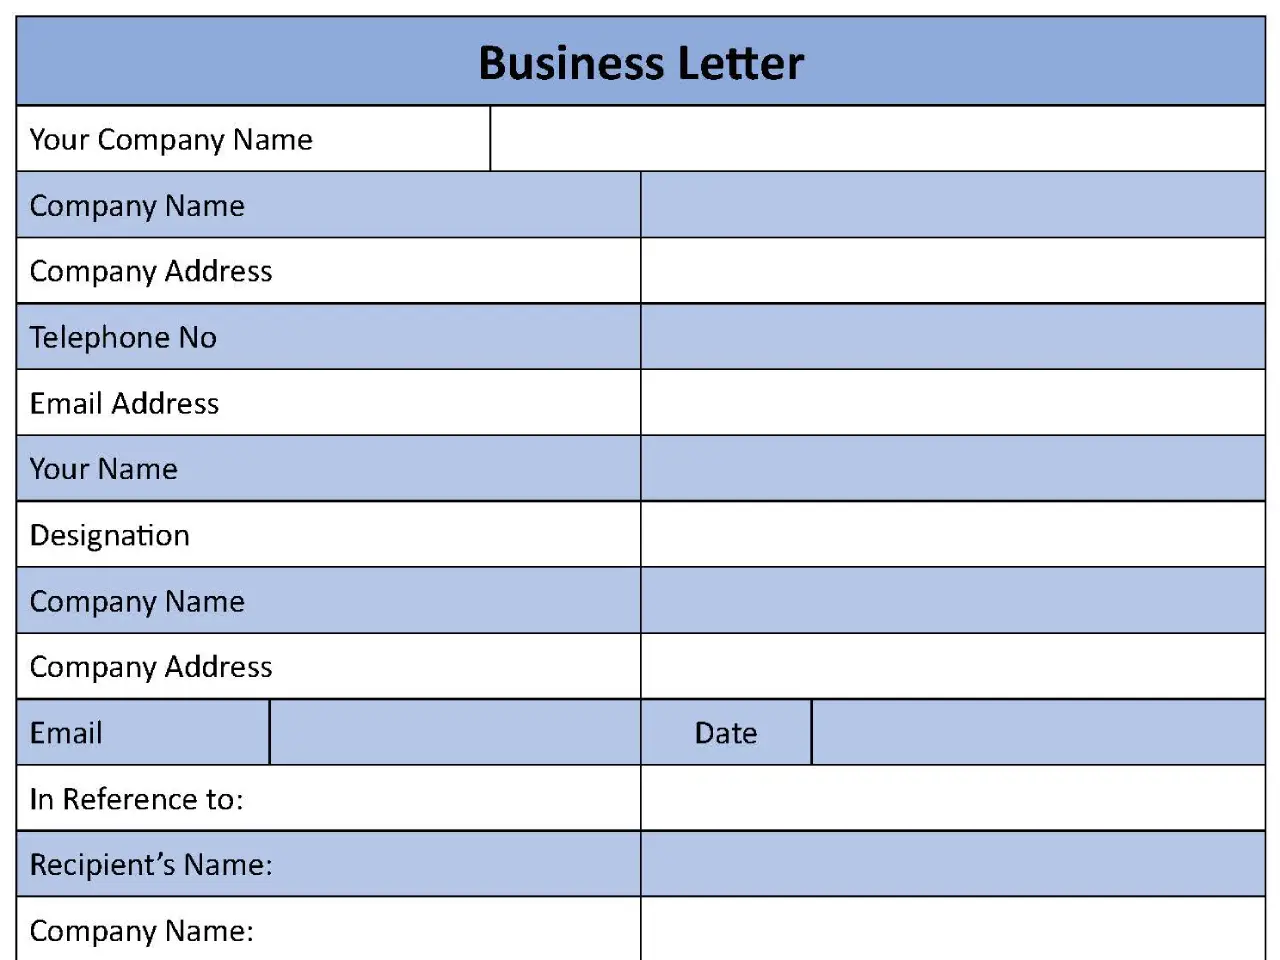 Business Letter Form